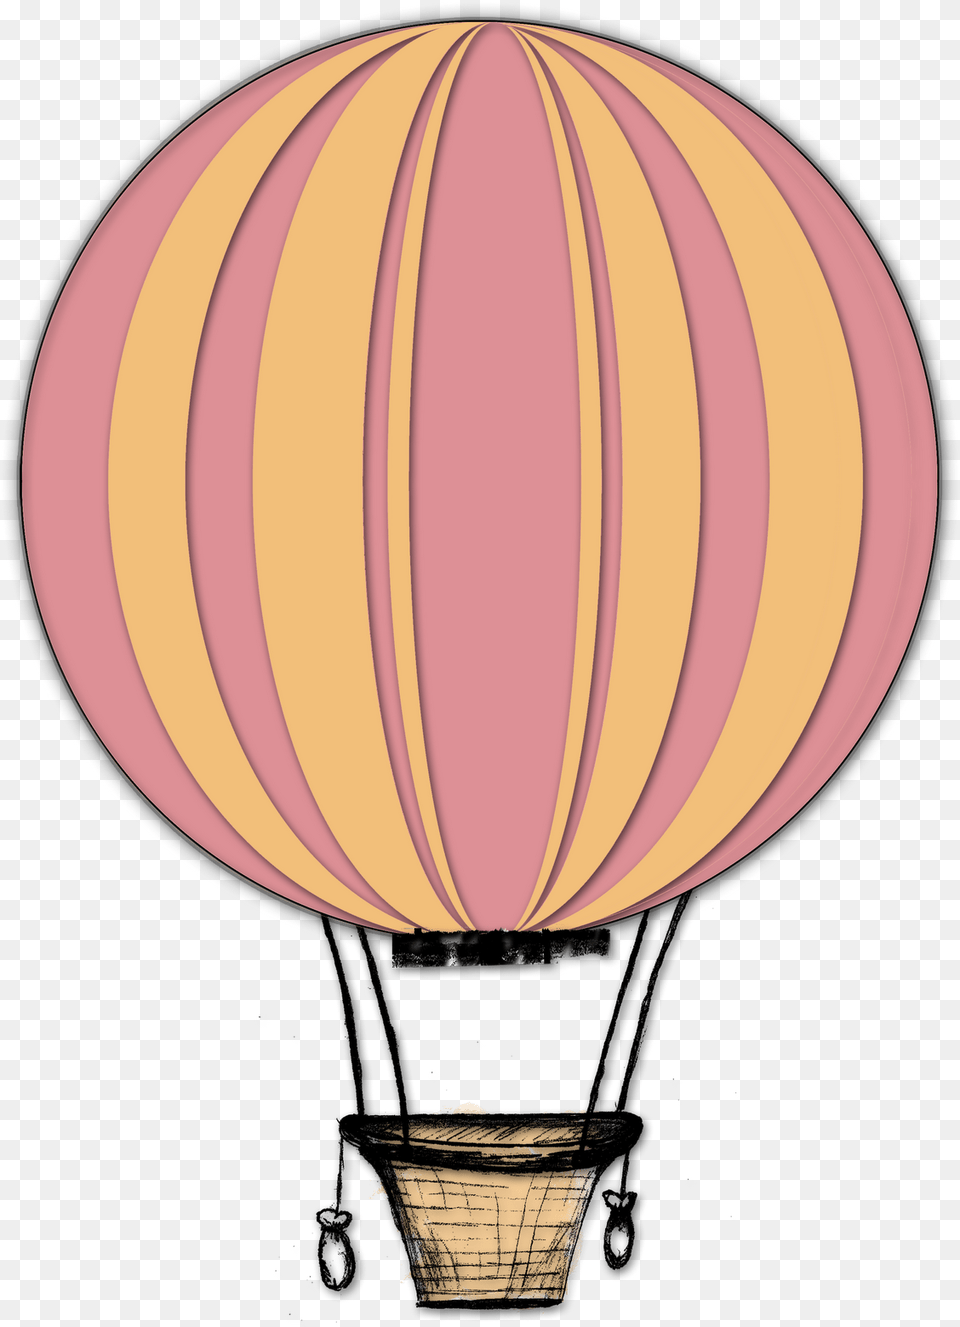 The Hot Air Balloon Dream Circle Hot Air Balloon, Aircraft, Transportation, Vehicle, Hot Air Balloon Png